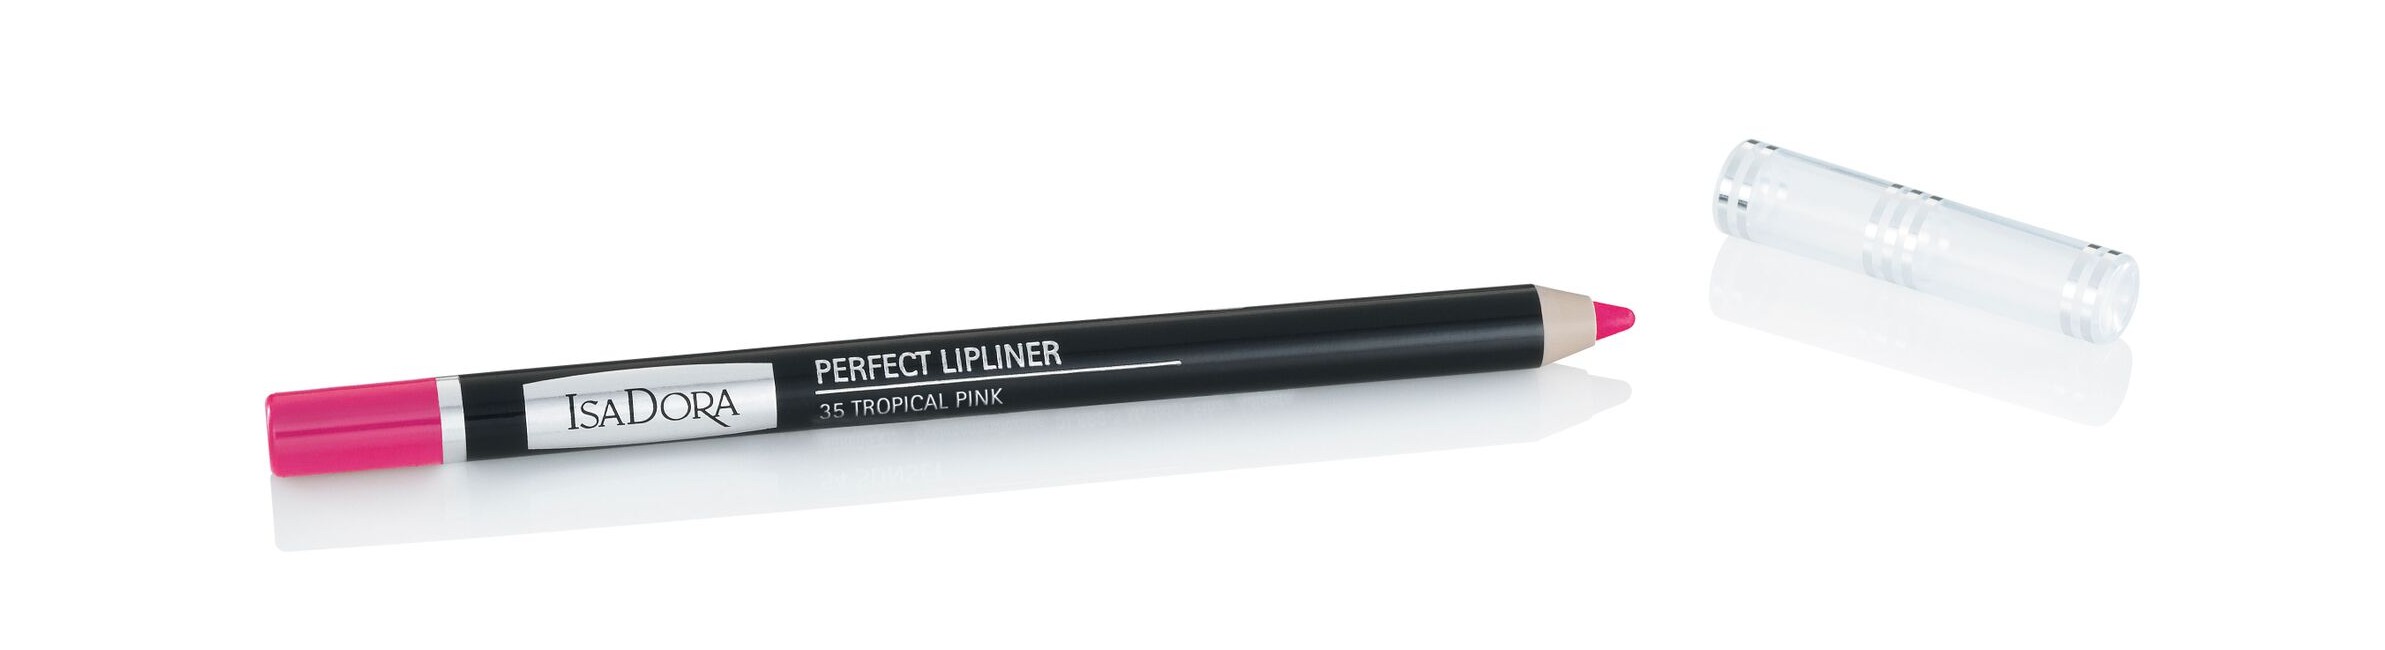 IsaDora - Perfect Lipliner - Tropical Pink